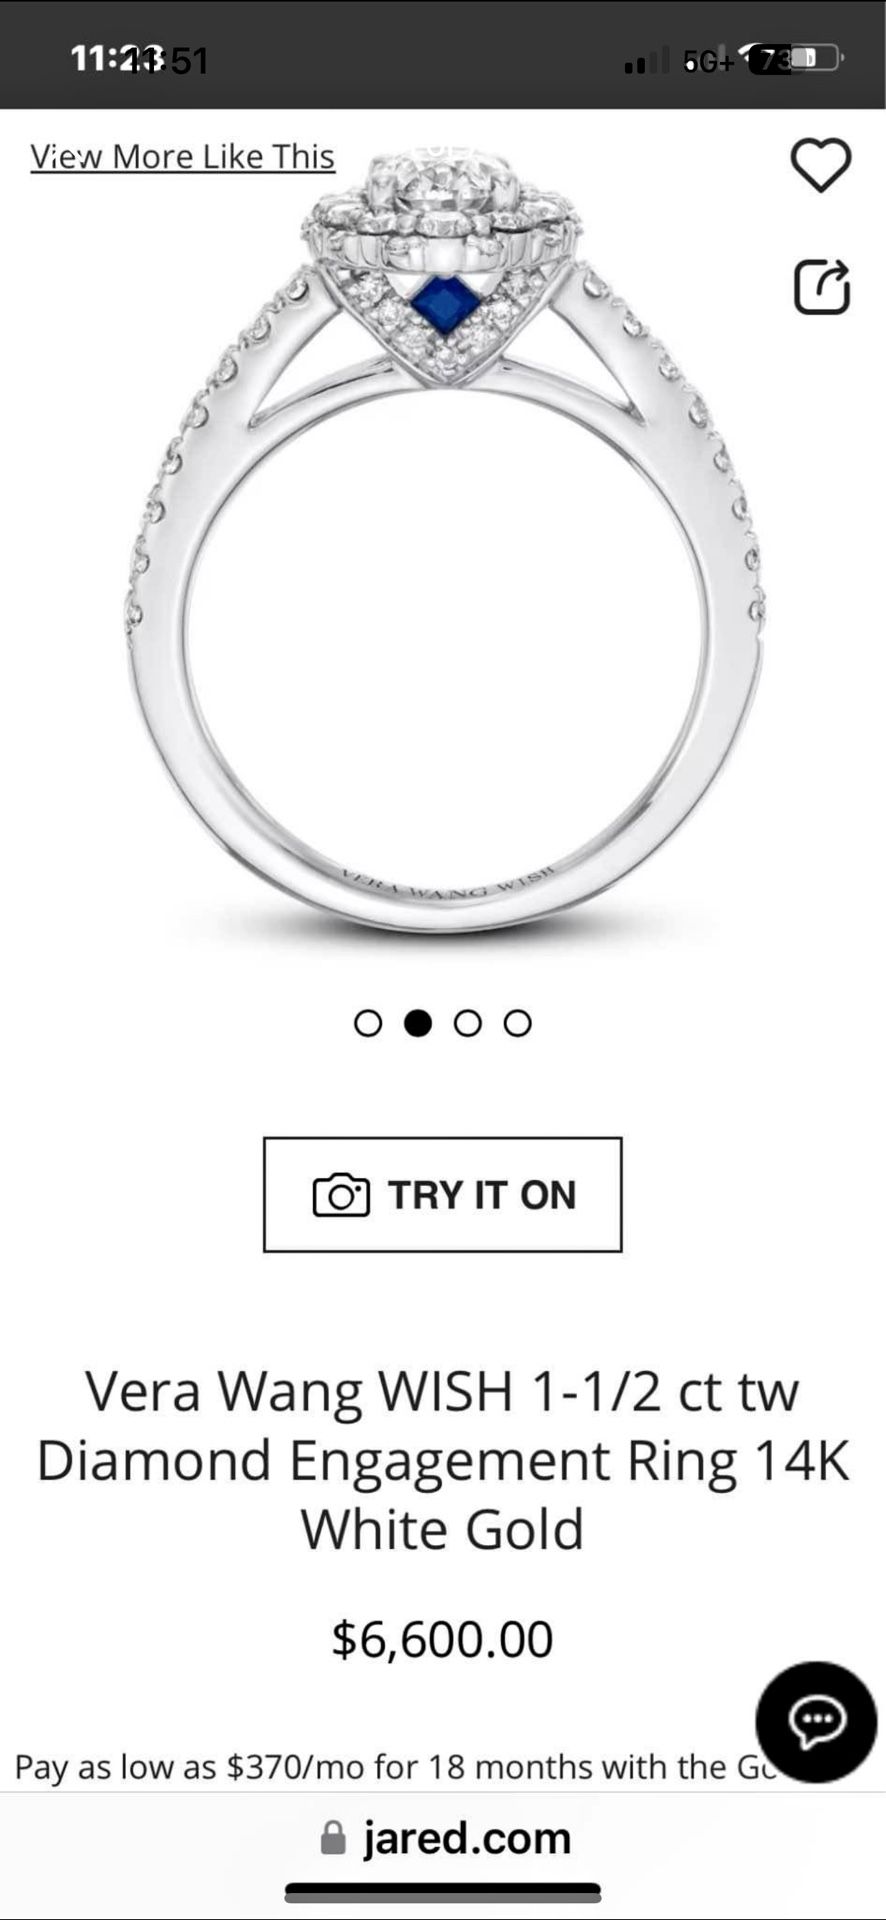 Vera Wang WISH engagement ring 